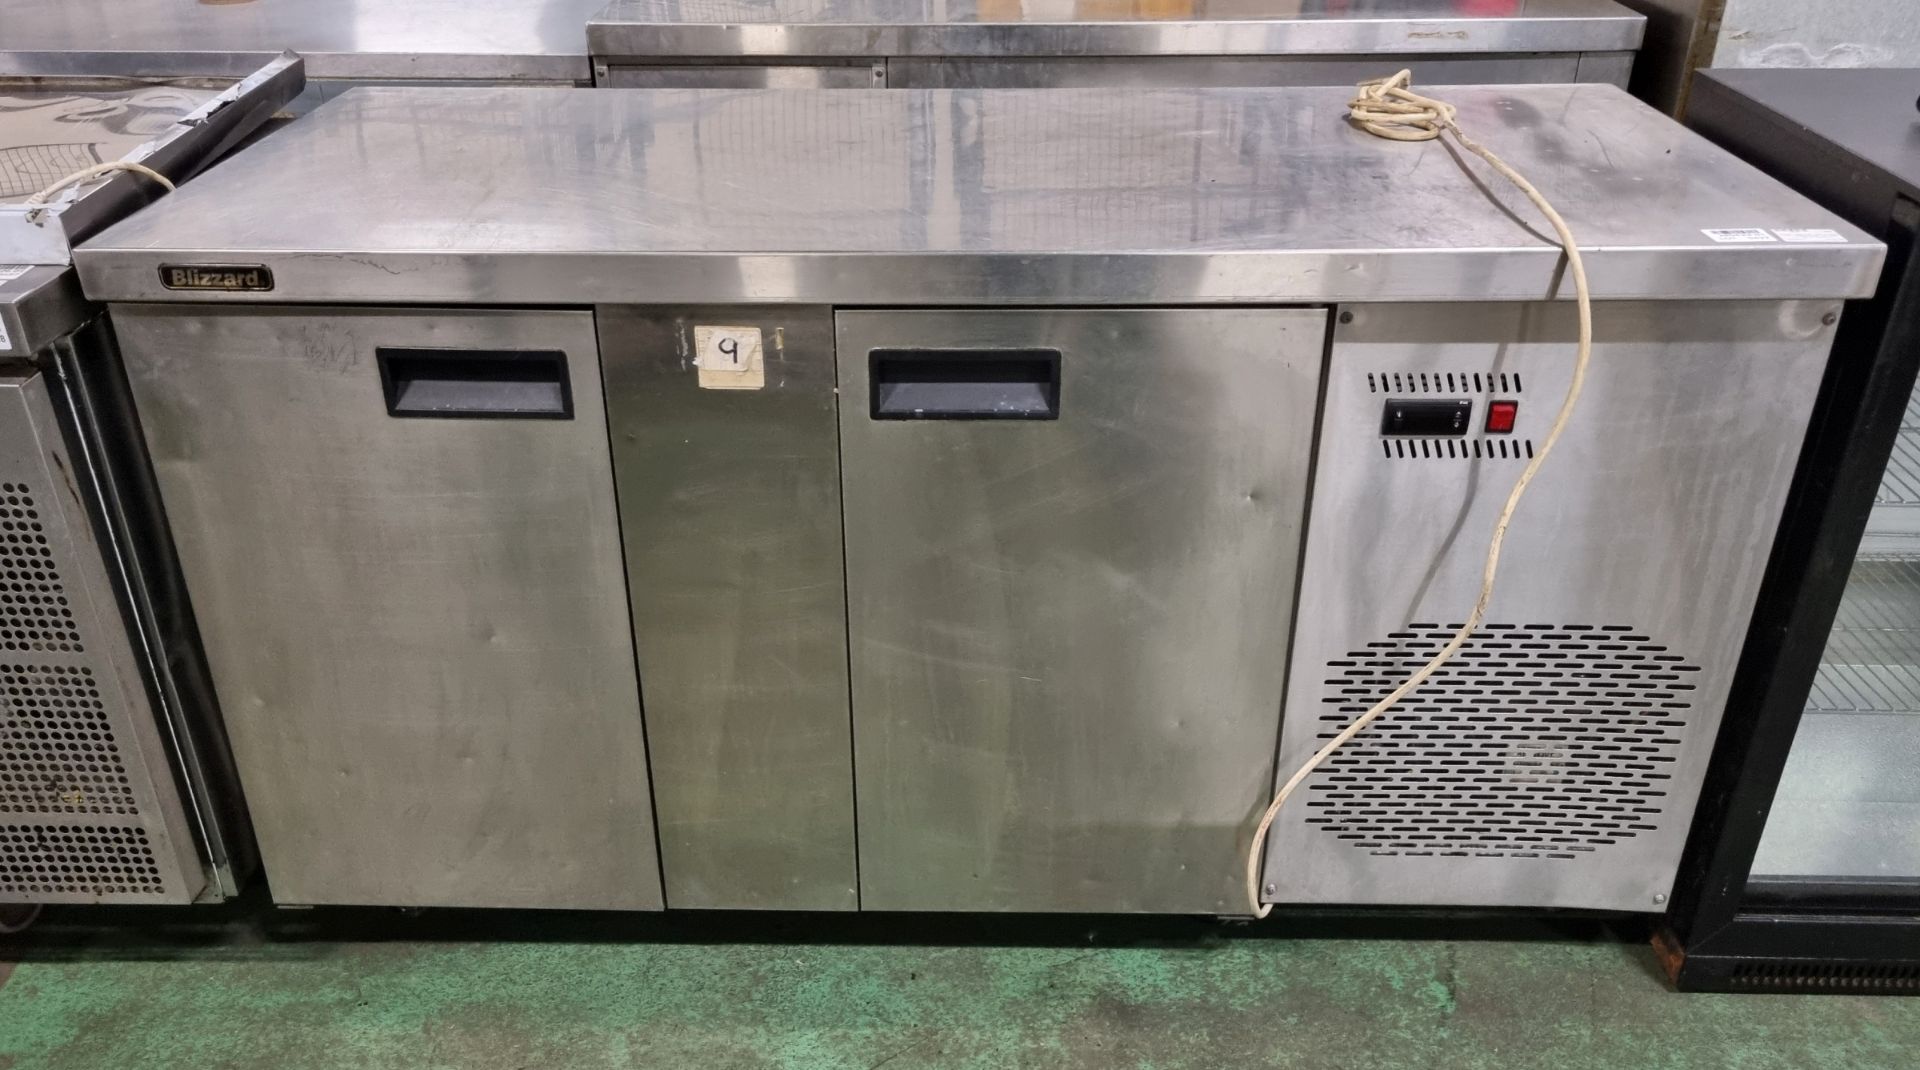 Blizzard stainless steel double door counter fridge - W 1560 x D 700 x H 860mm